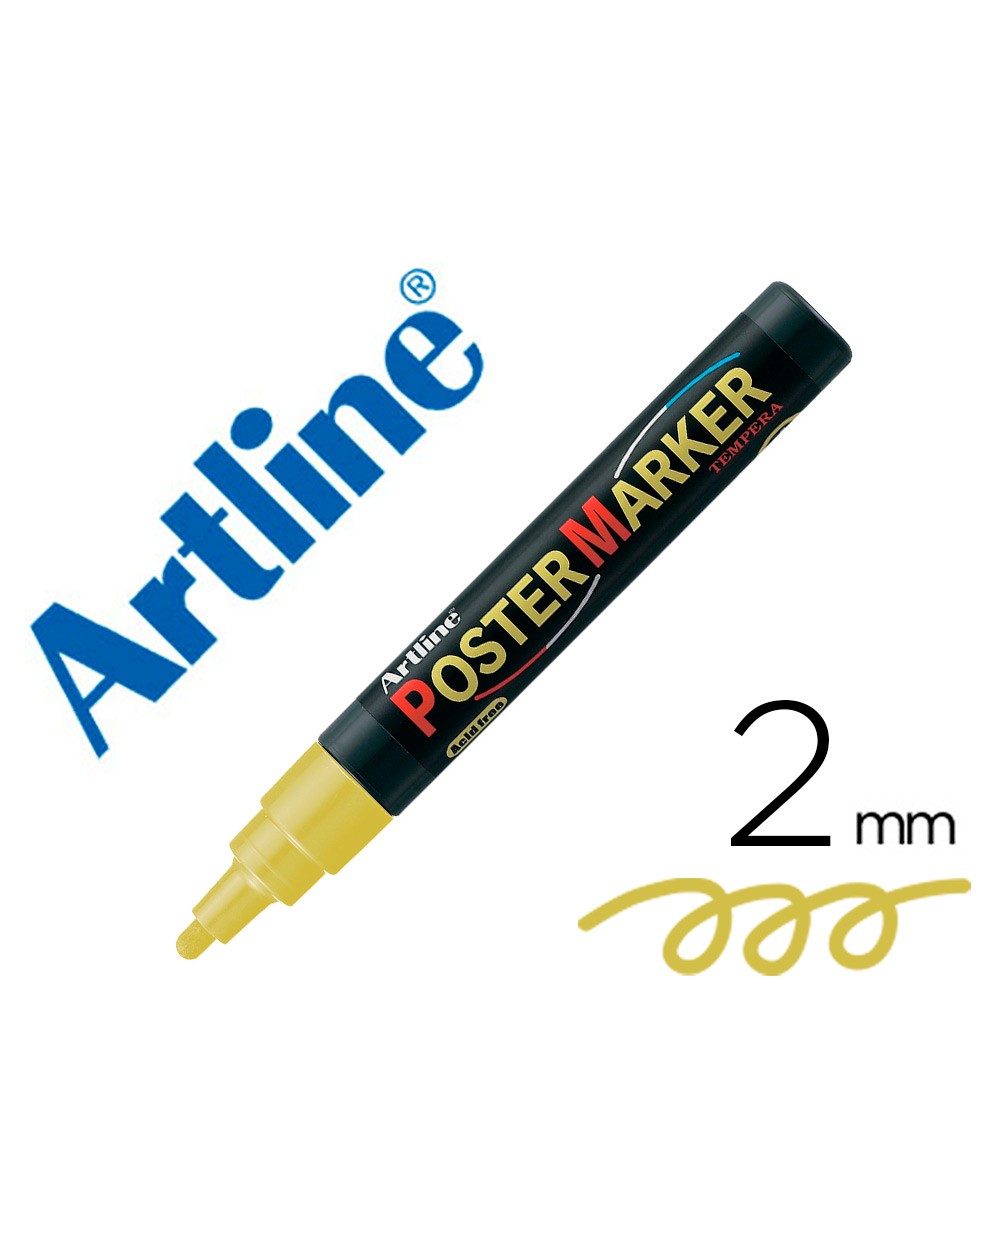 Rotulador artline poster marker epp 4 oro met punta redonda 2 mm color metalizado oro